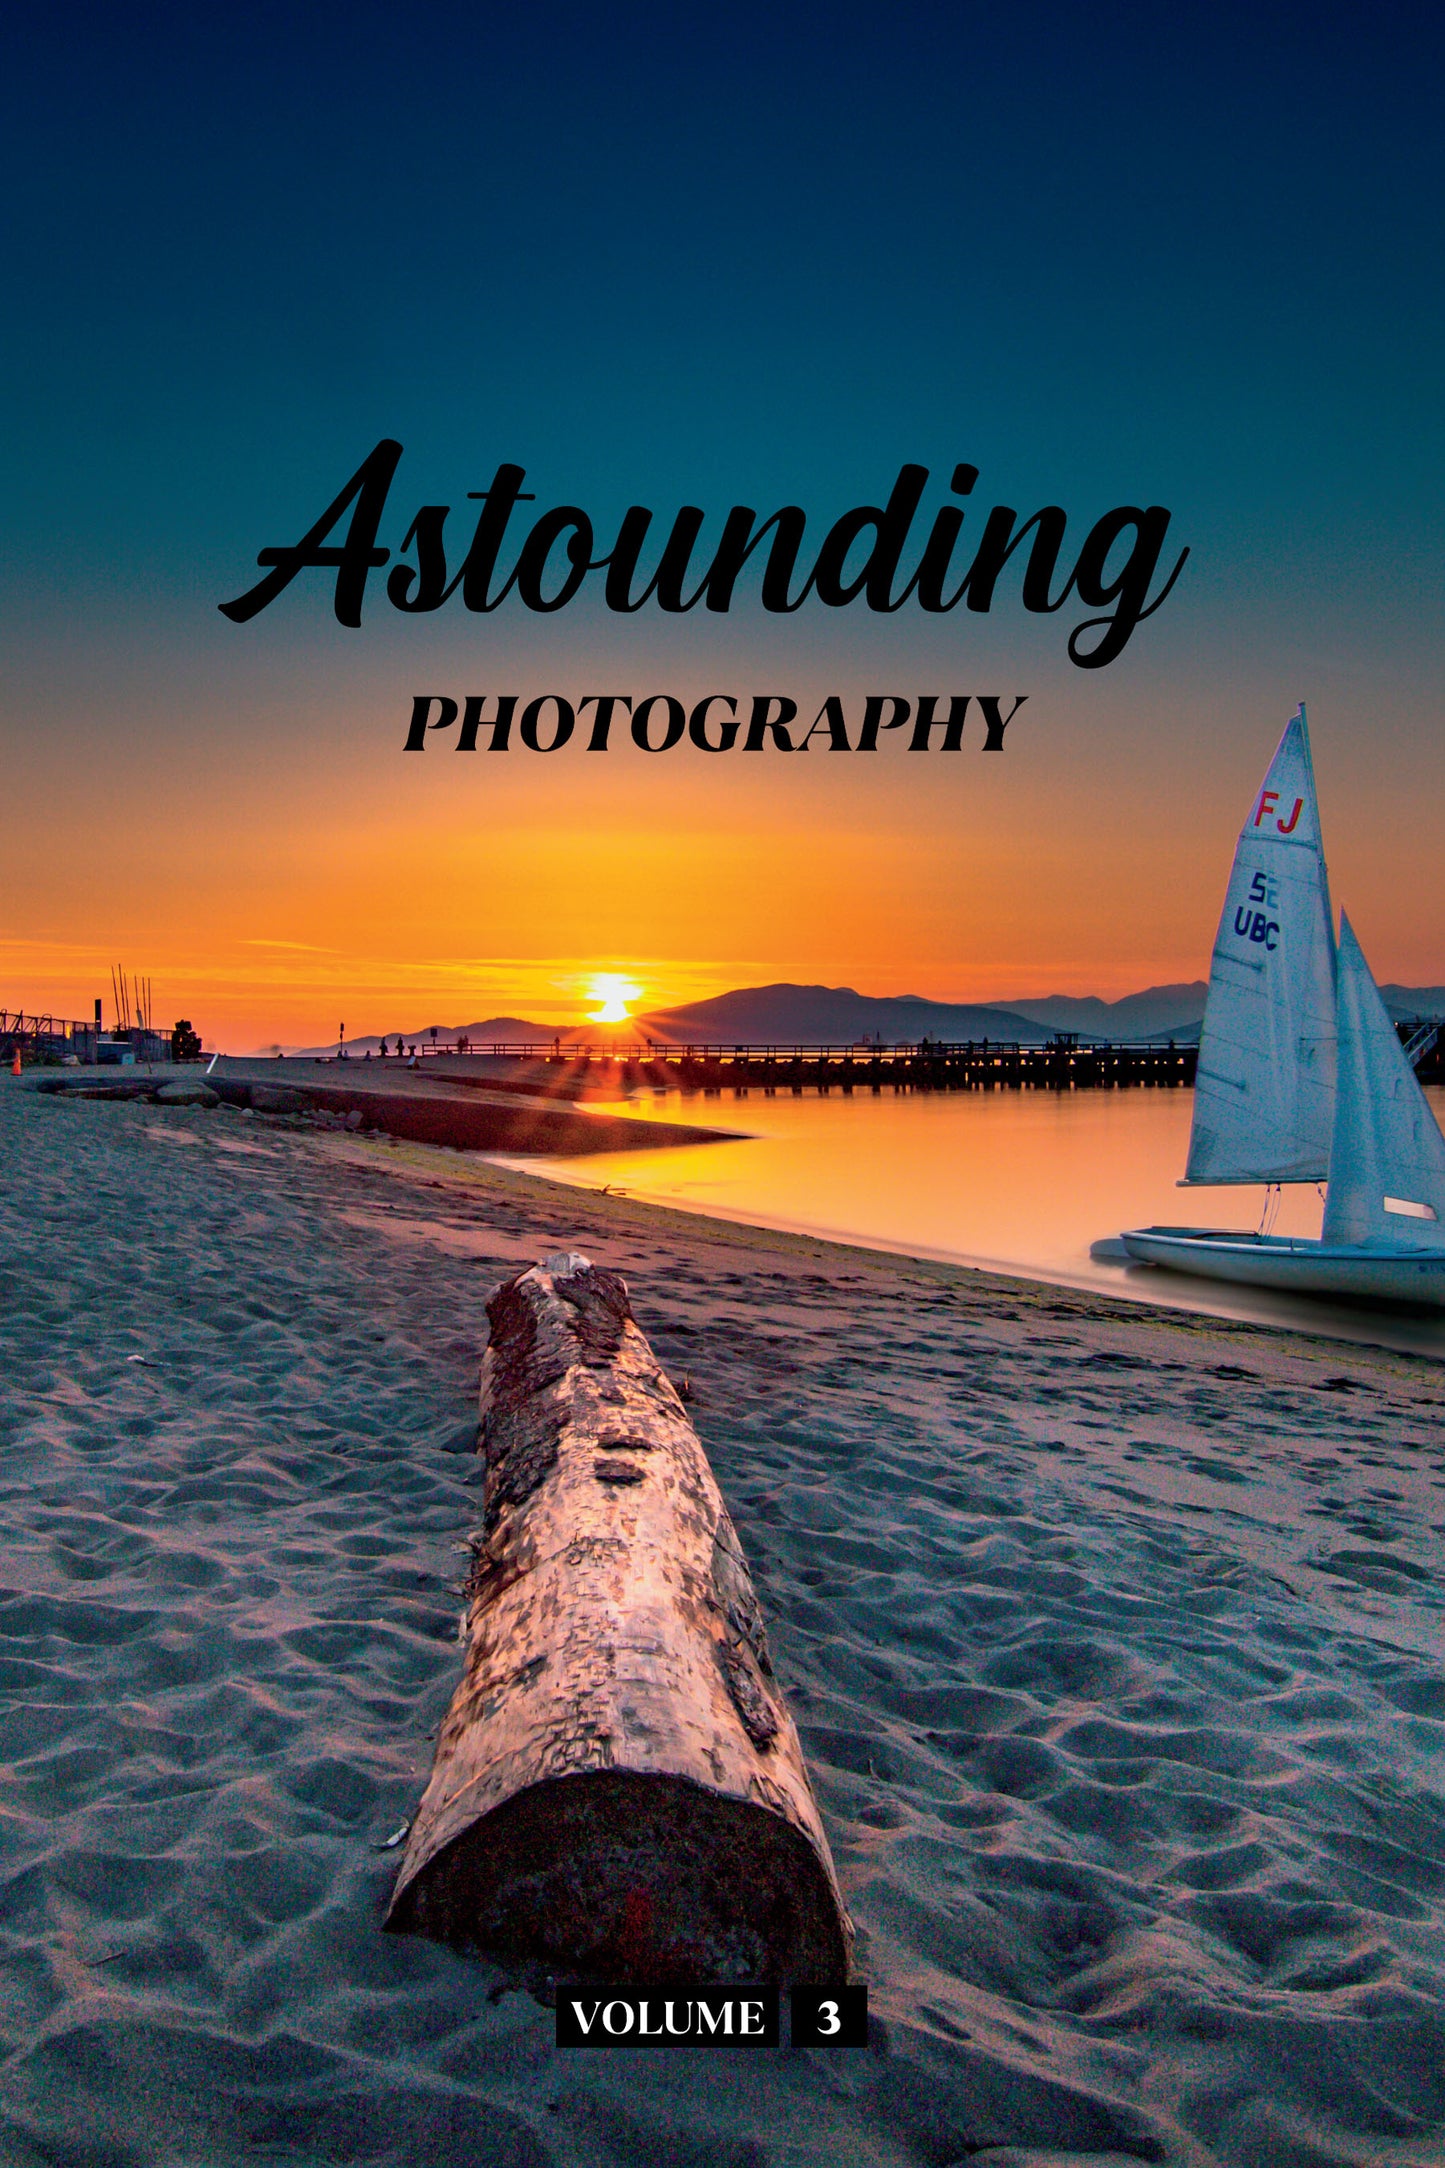 Astounding Photography Volume 3 (Physical Book)